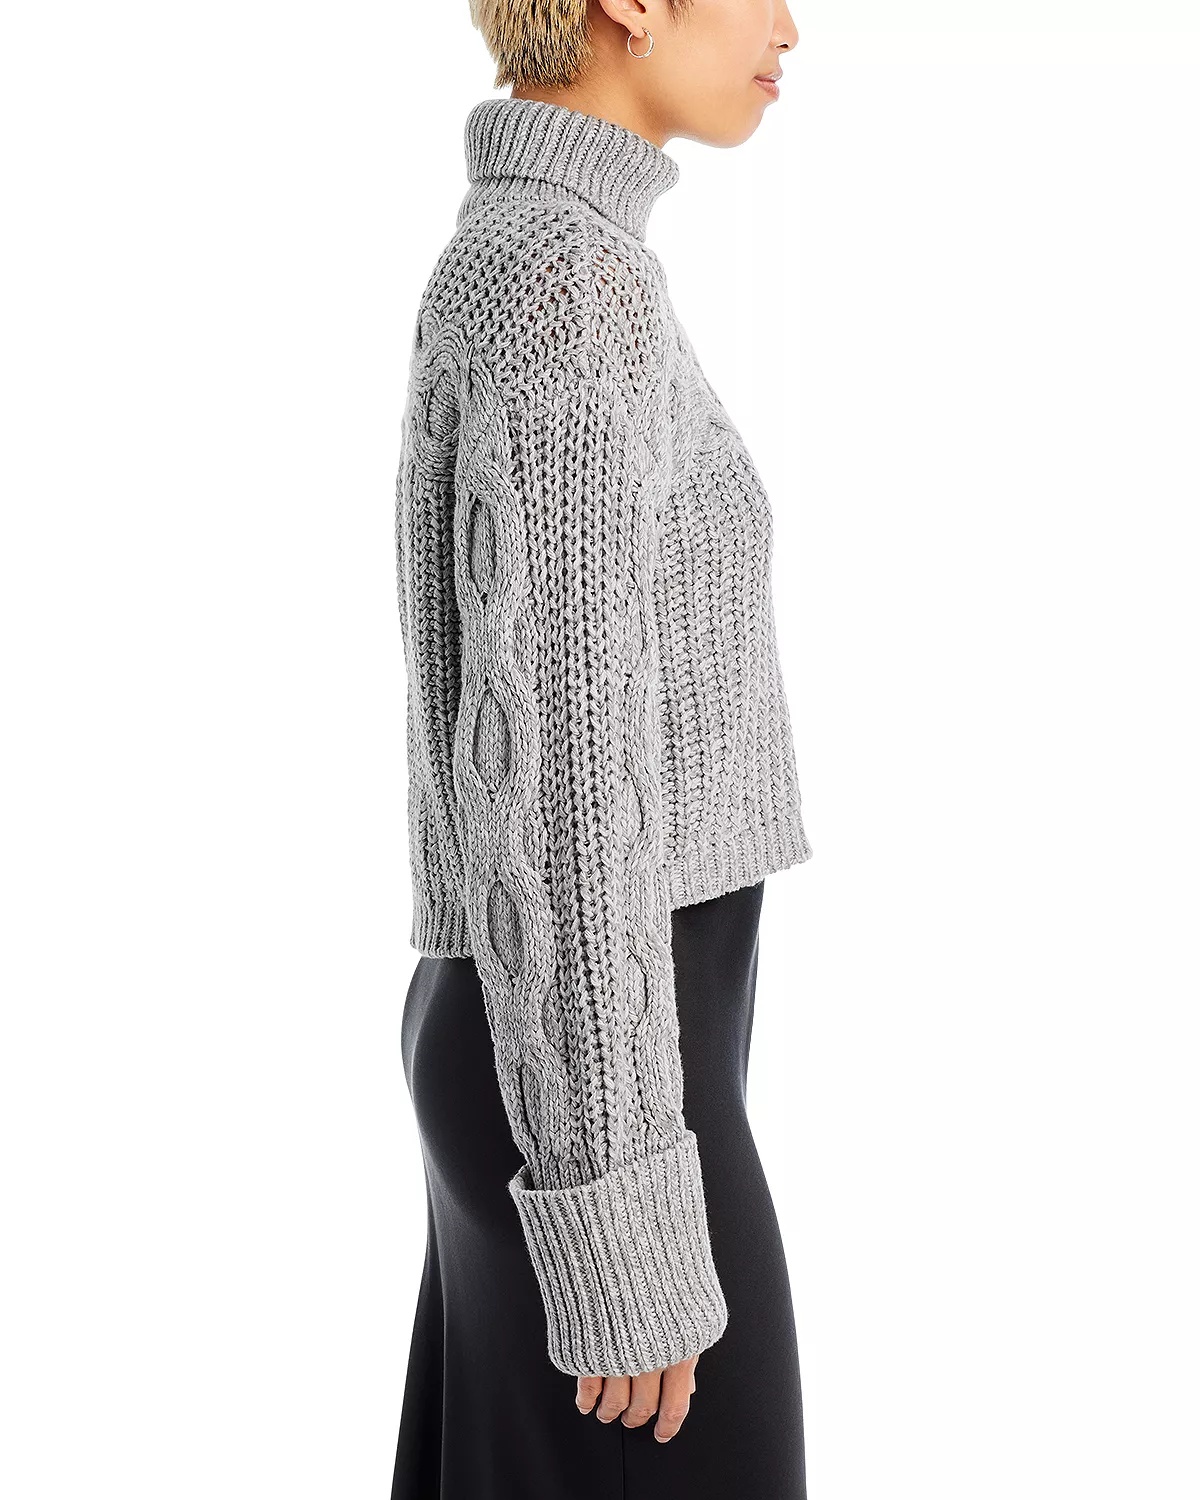 Vernacular Sweater - 5